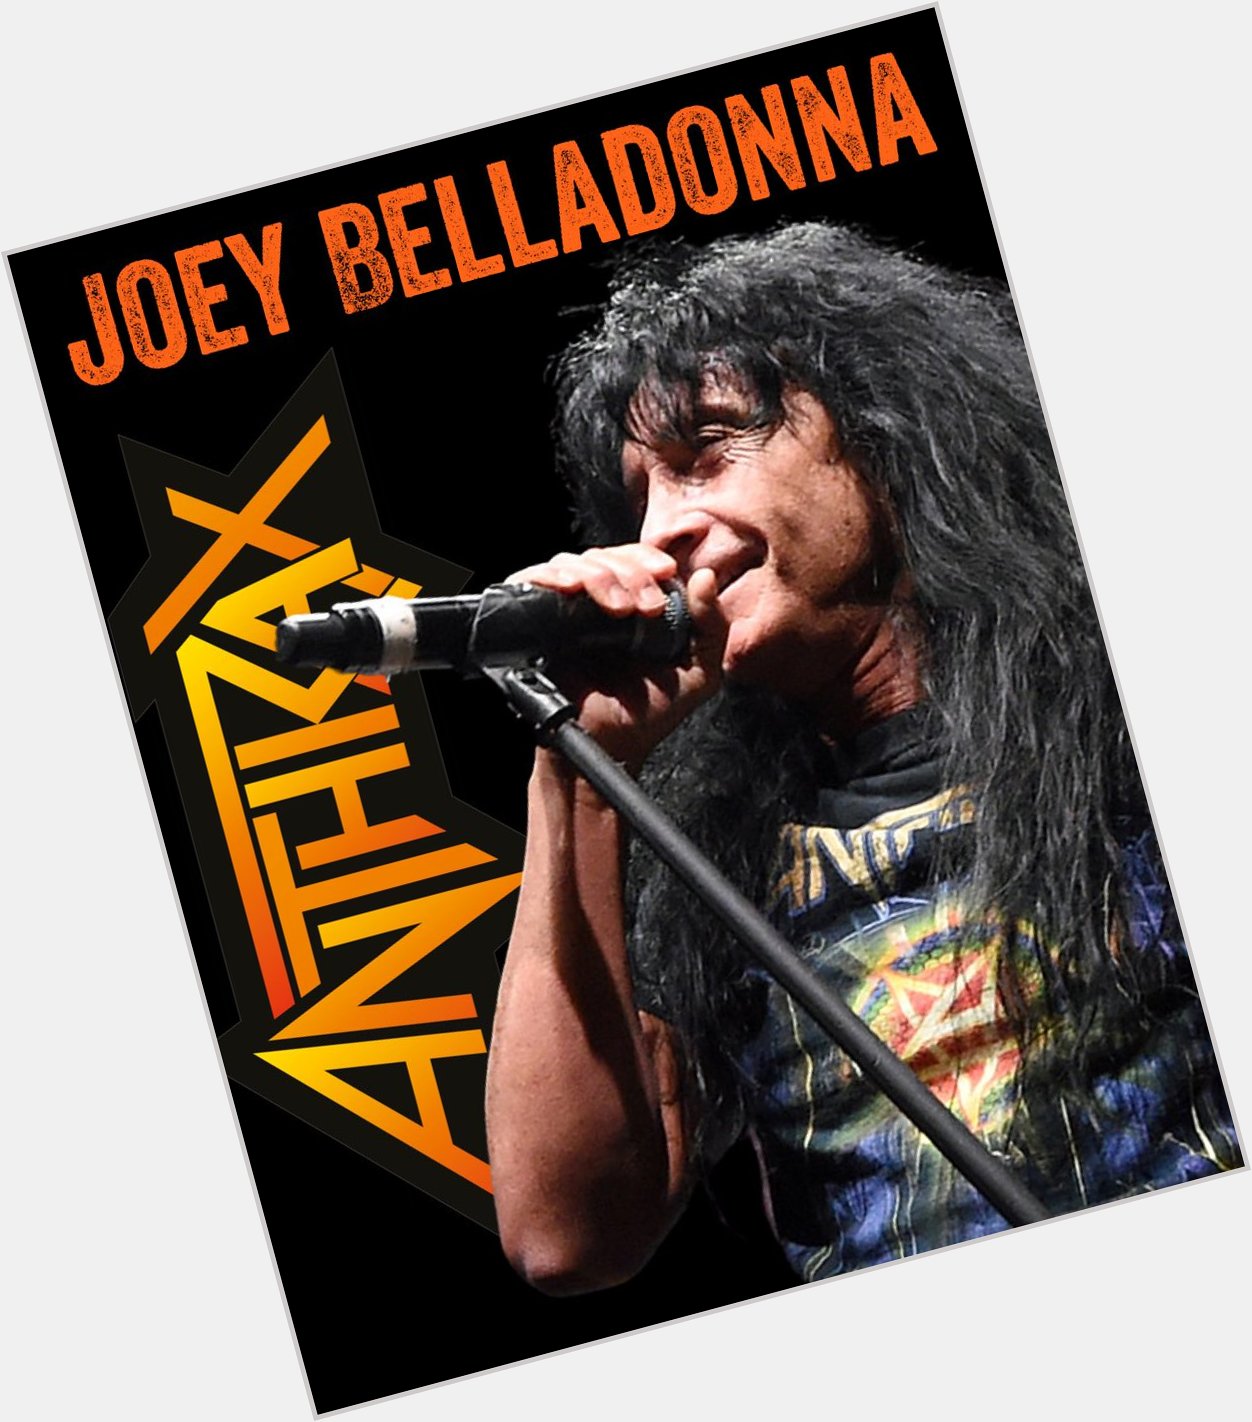 Happy Birthday Joey Belladonna
Lead singer for Anthrax
October 13, 1960 Oswego, New York 